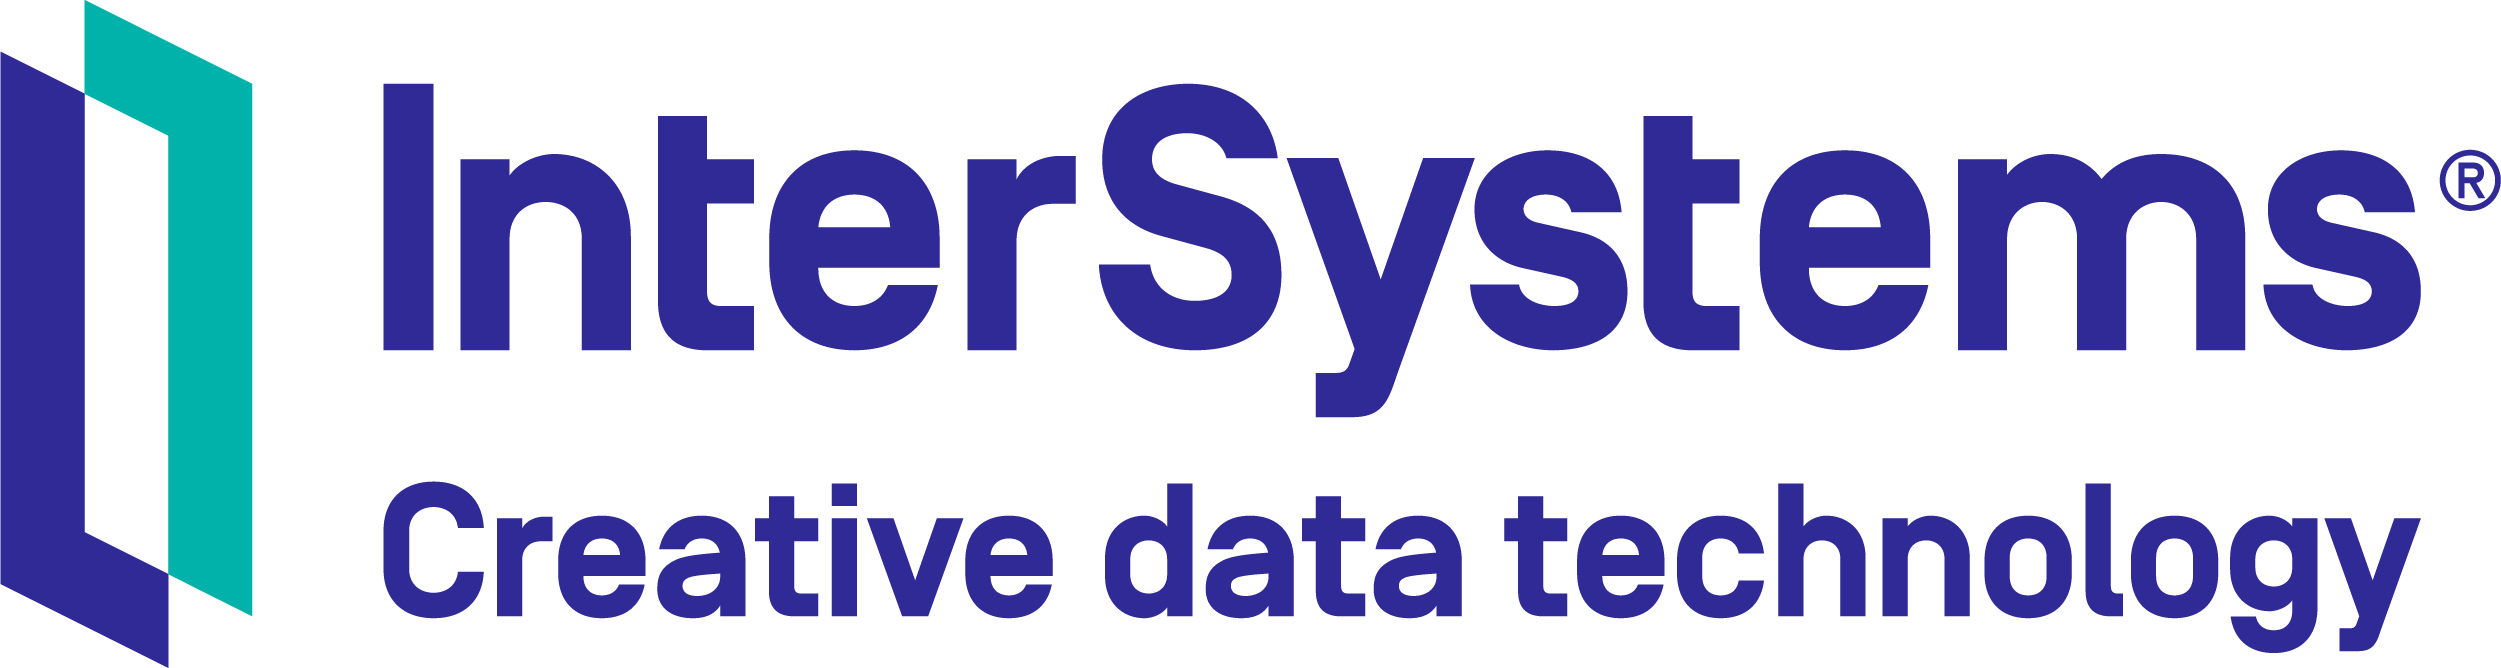 Logo-Intersystems